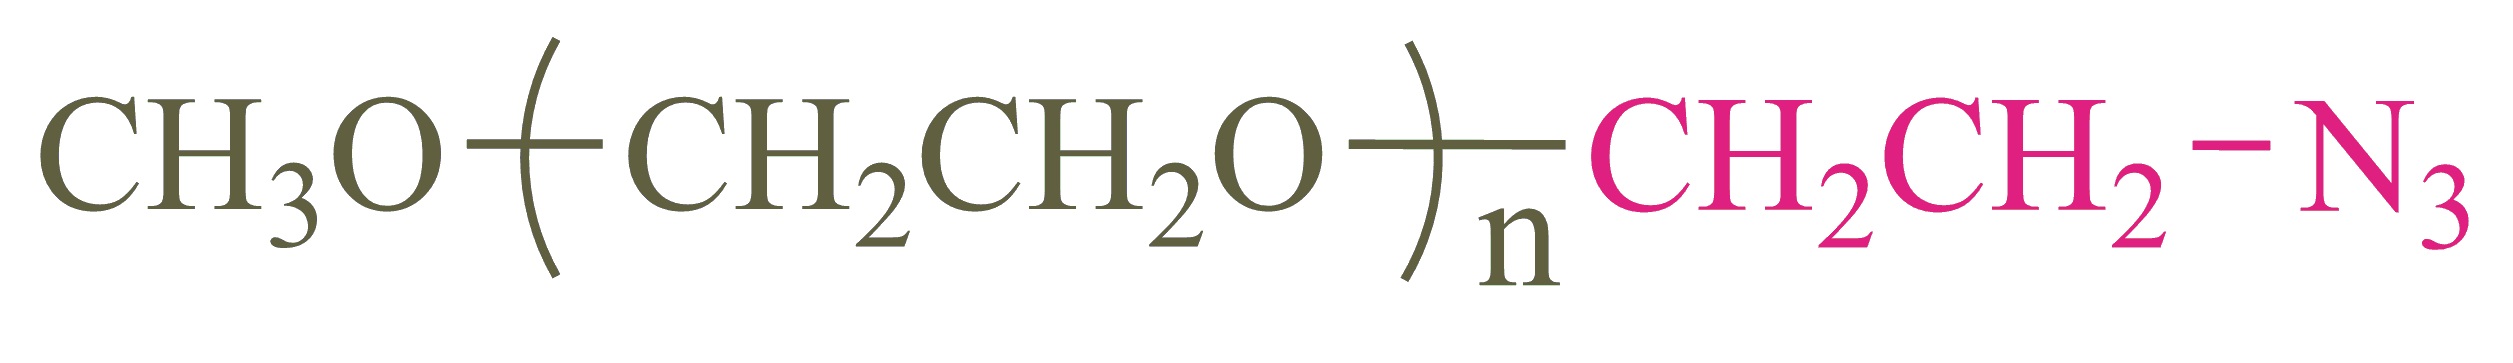 甲氧基聚乙二醇叠氮化物（mPEG-N3），Methoxypoly(ethylene glycol) azide